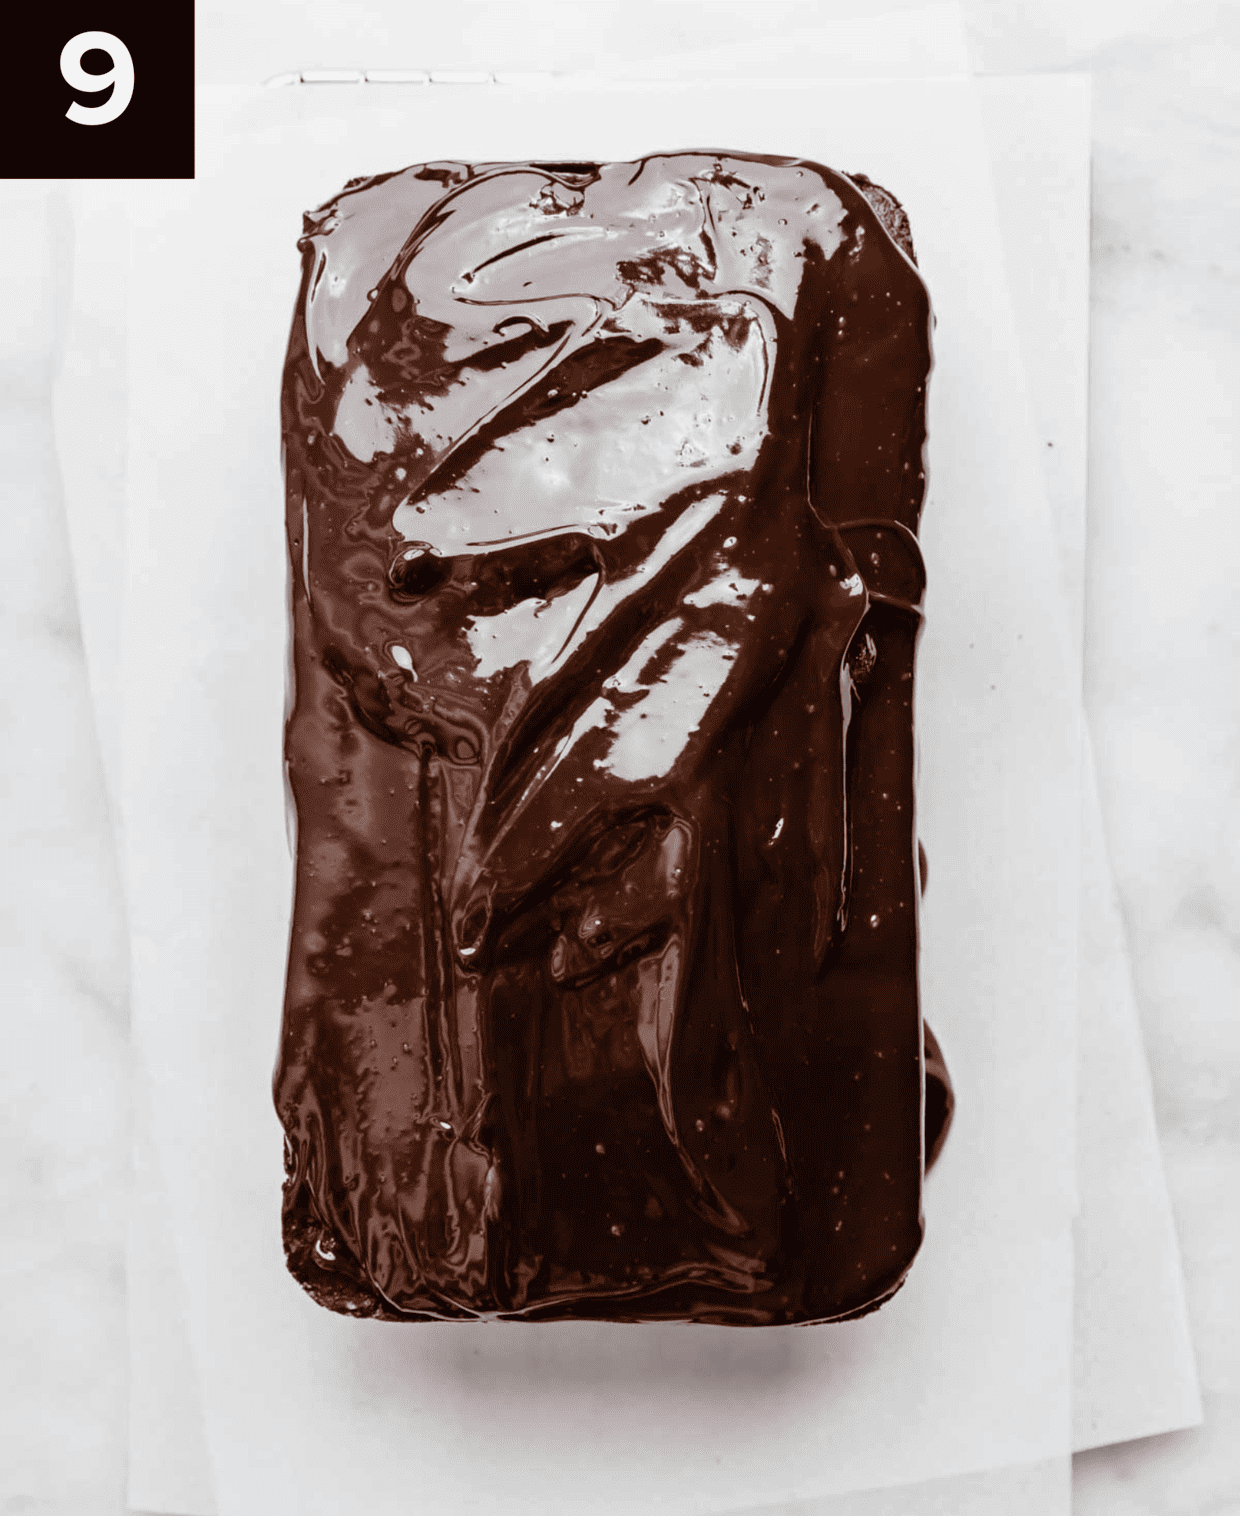 Overhead photo of a chocolate glazed Chocolate Pound Cake on a white background.